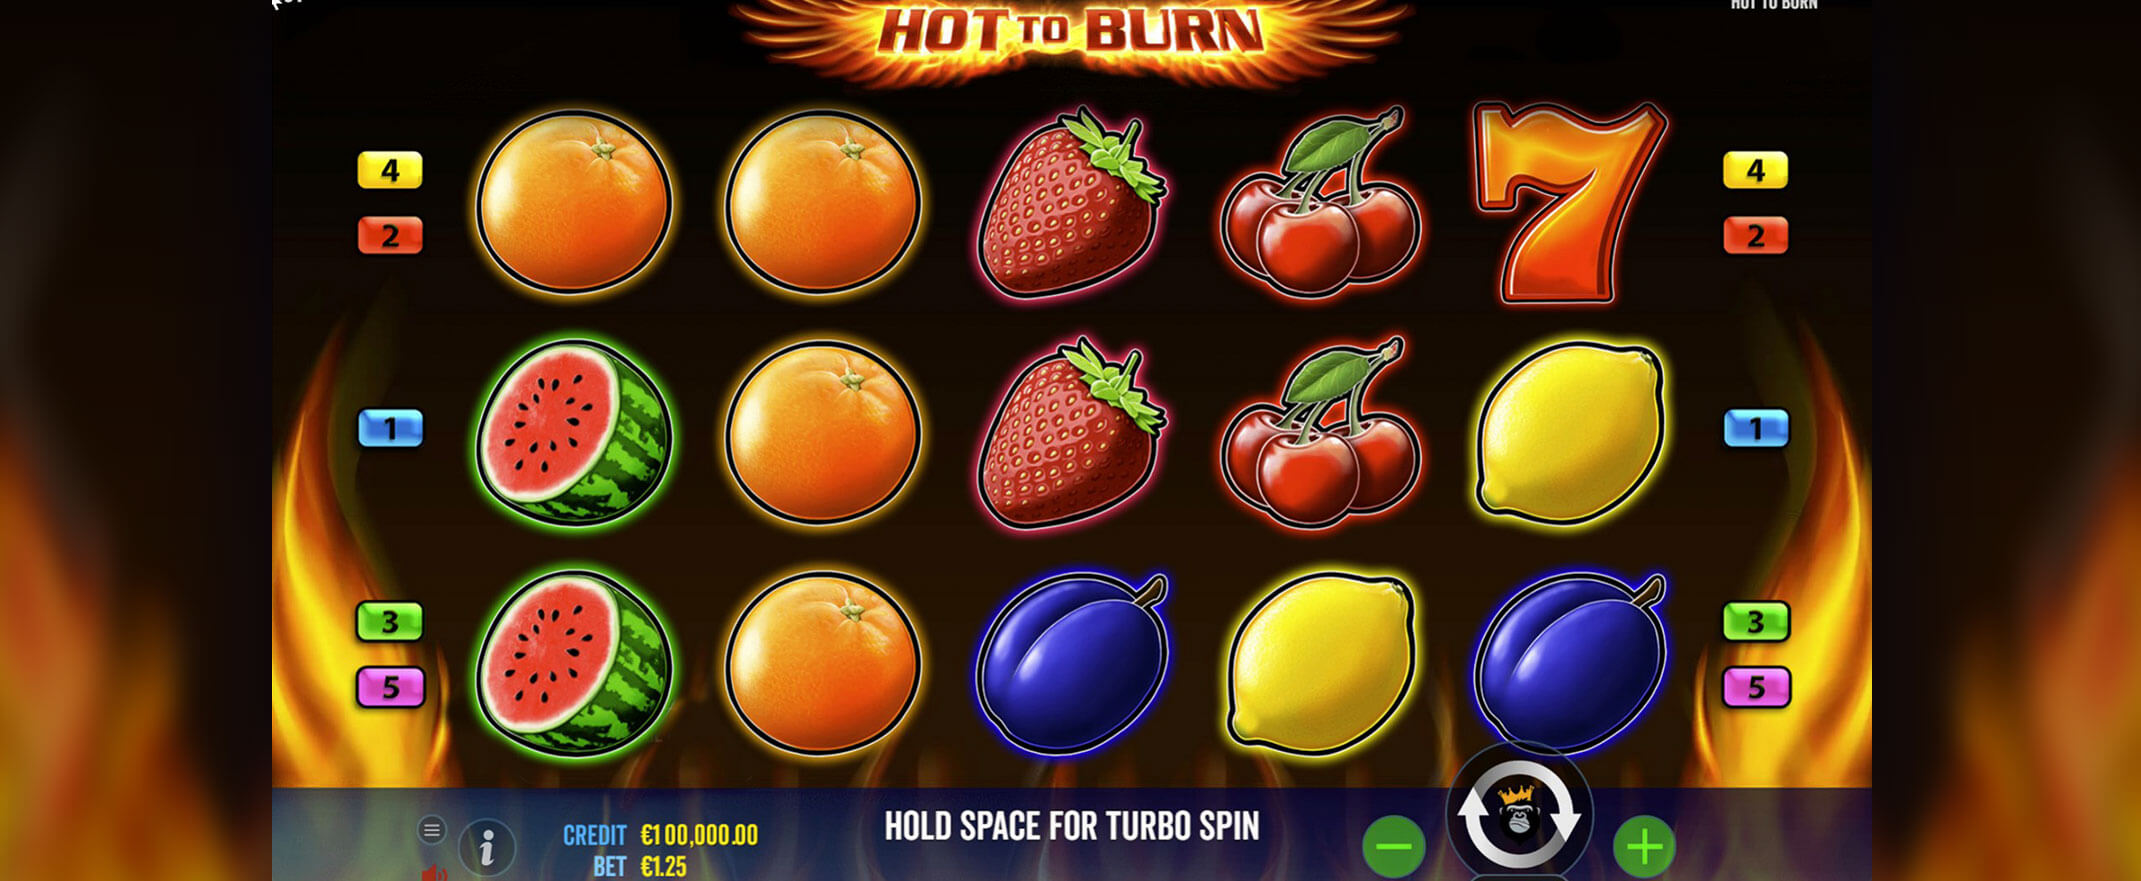 Hot to Burn Spielautomaten Bewertung